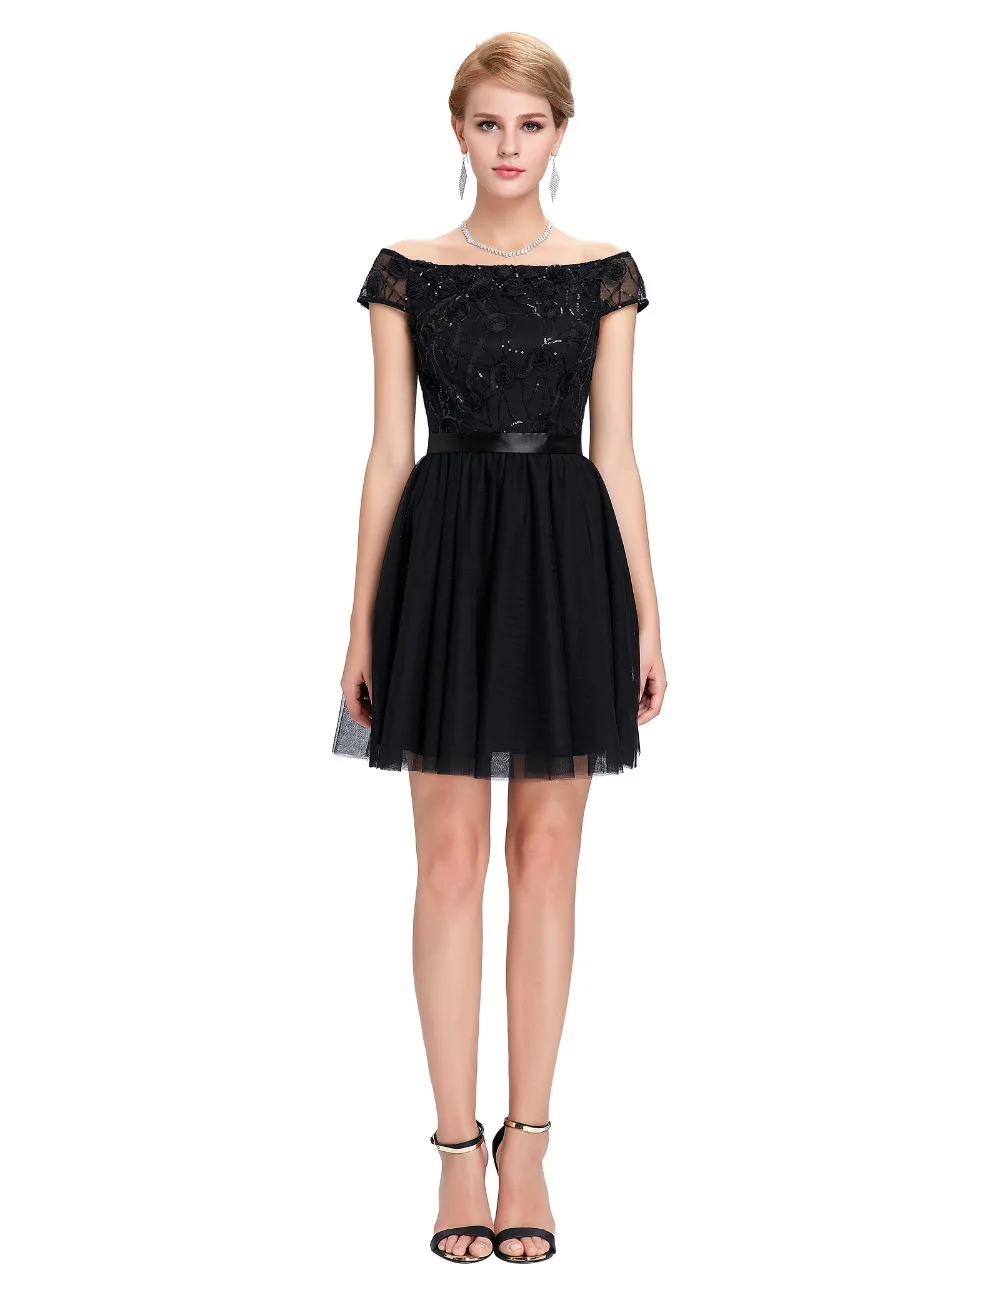 Aliexpress.com : Buy Sexy Off Shoulder Short Black Evening Dress ...